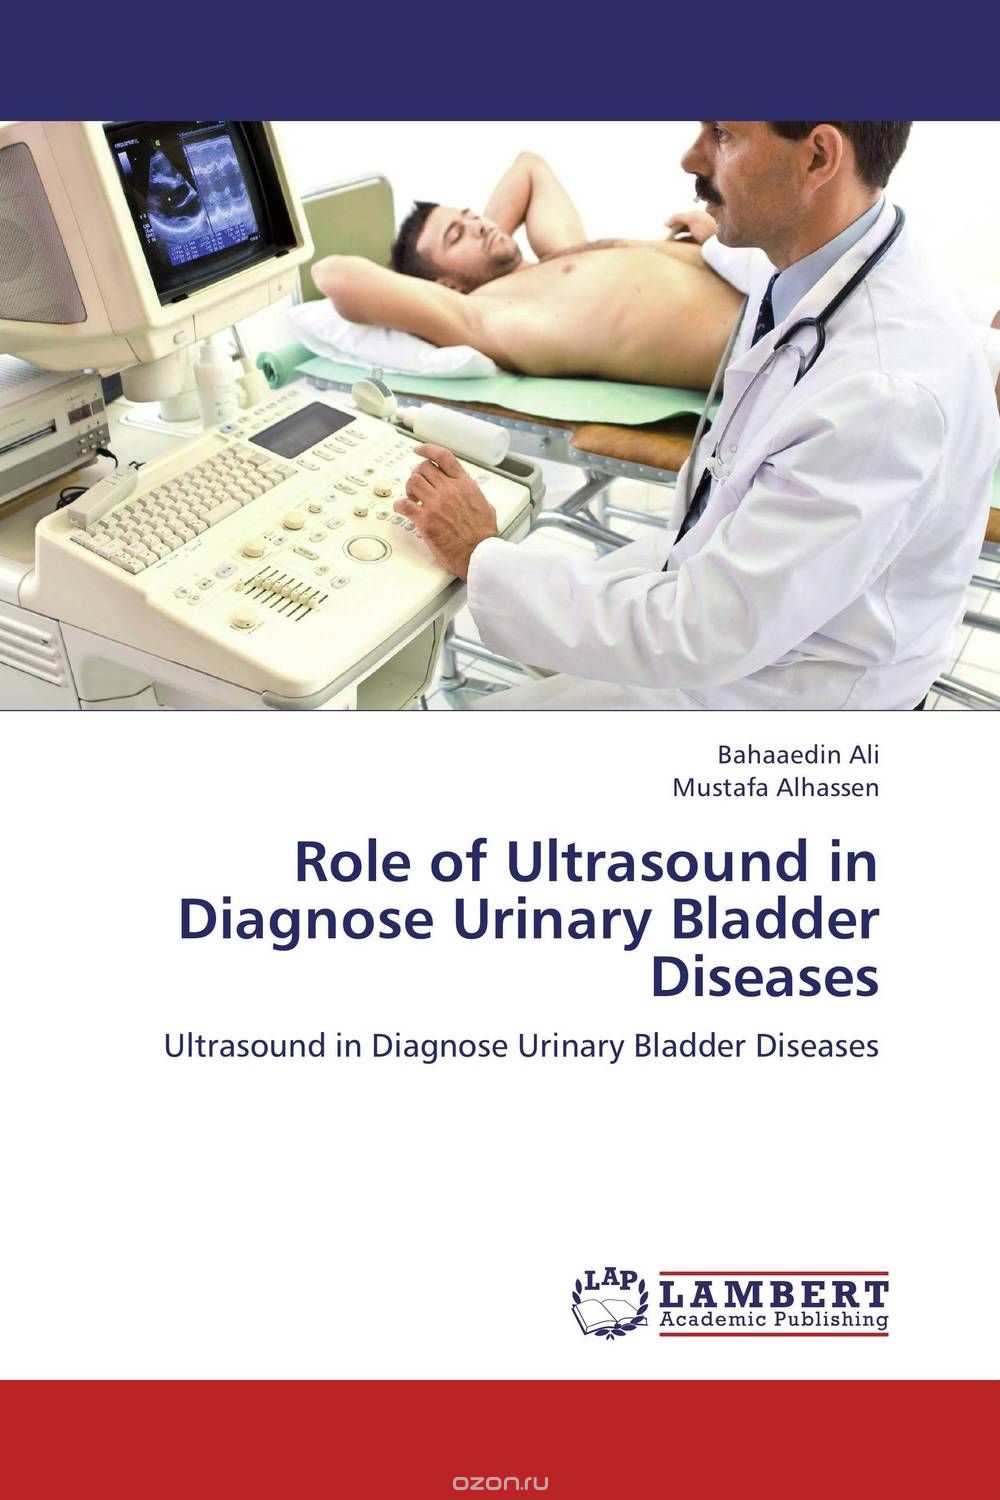 Скачать книгу "Role of Ultrasound in Diagnose Urinary Bladder Diseases"